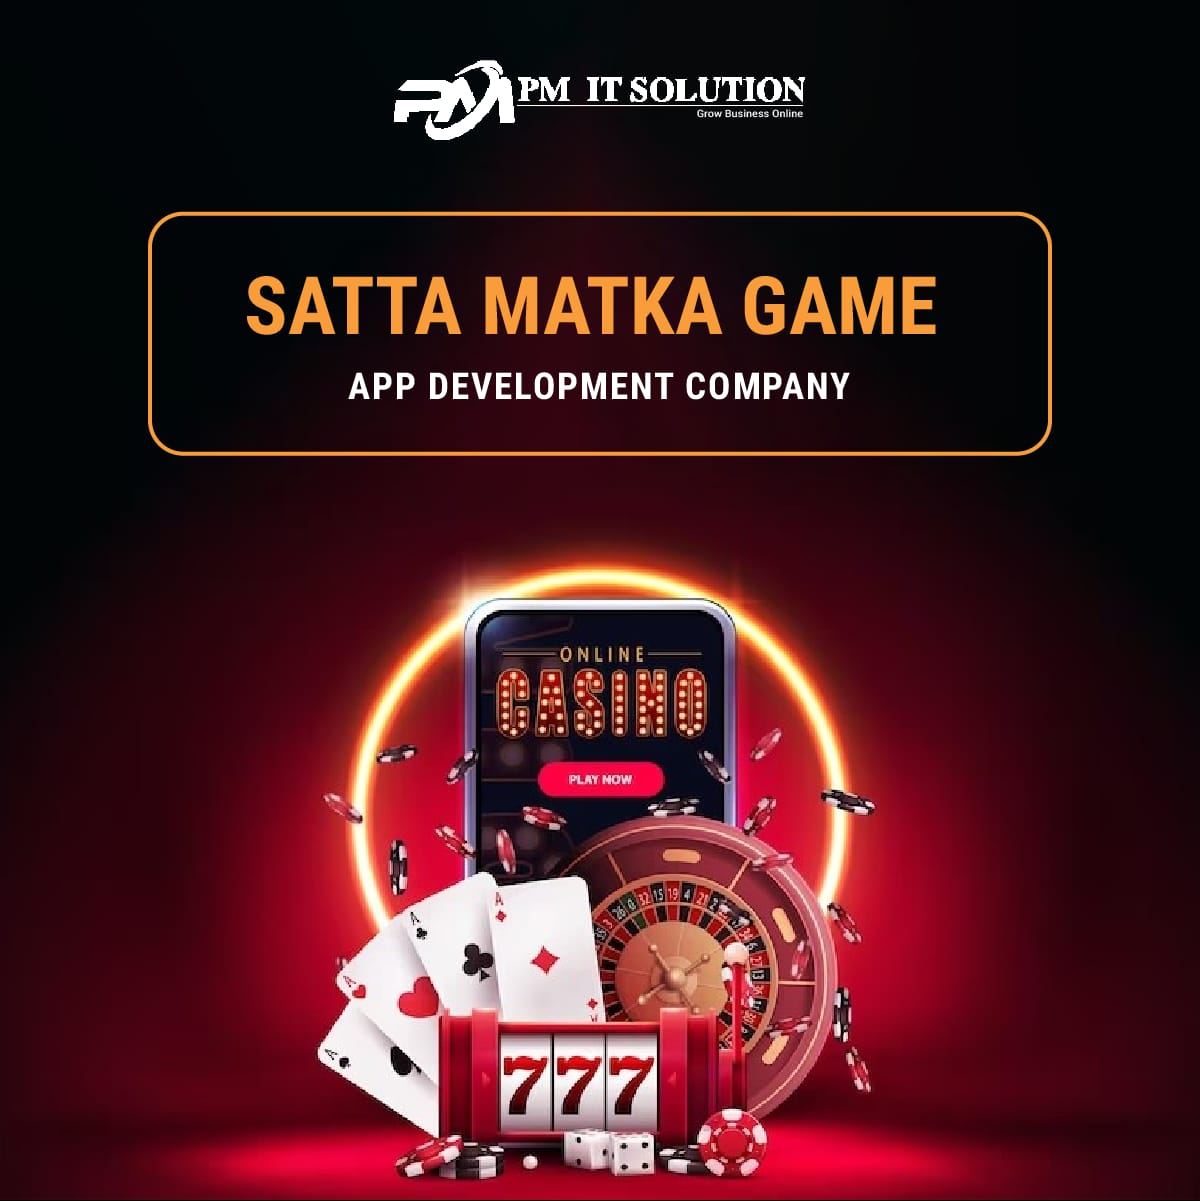 Satta Matka App Development Company & Teen Patti Game: The Future of App Development